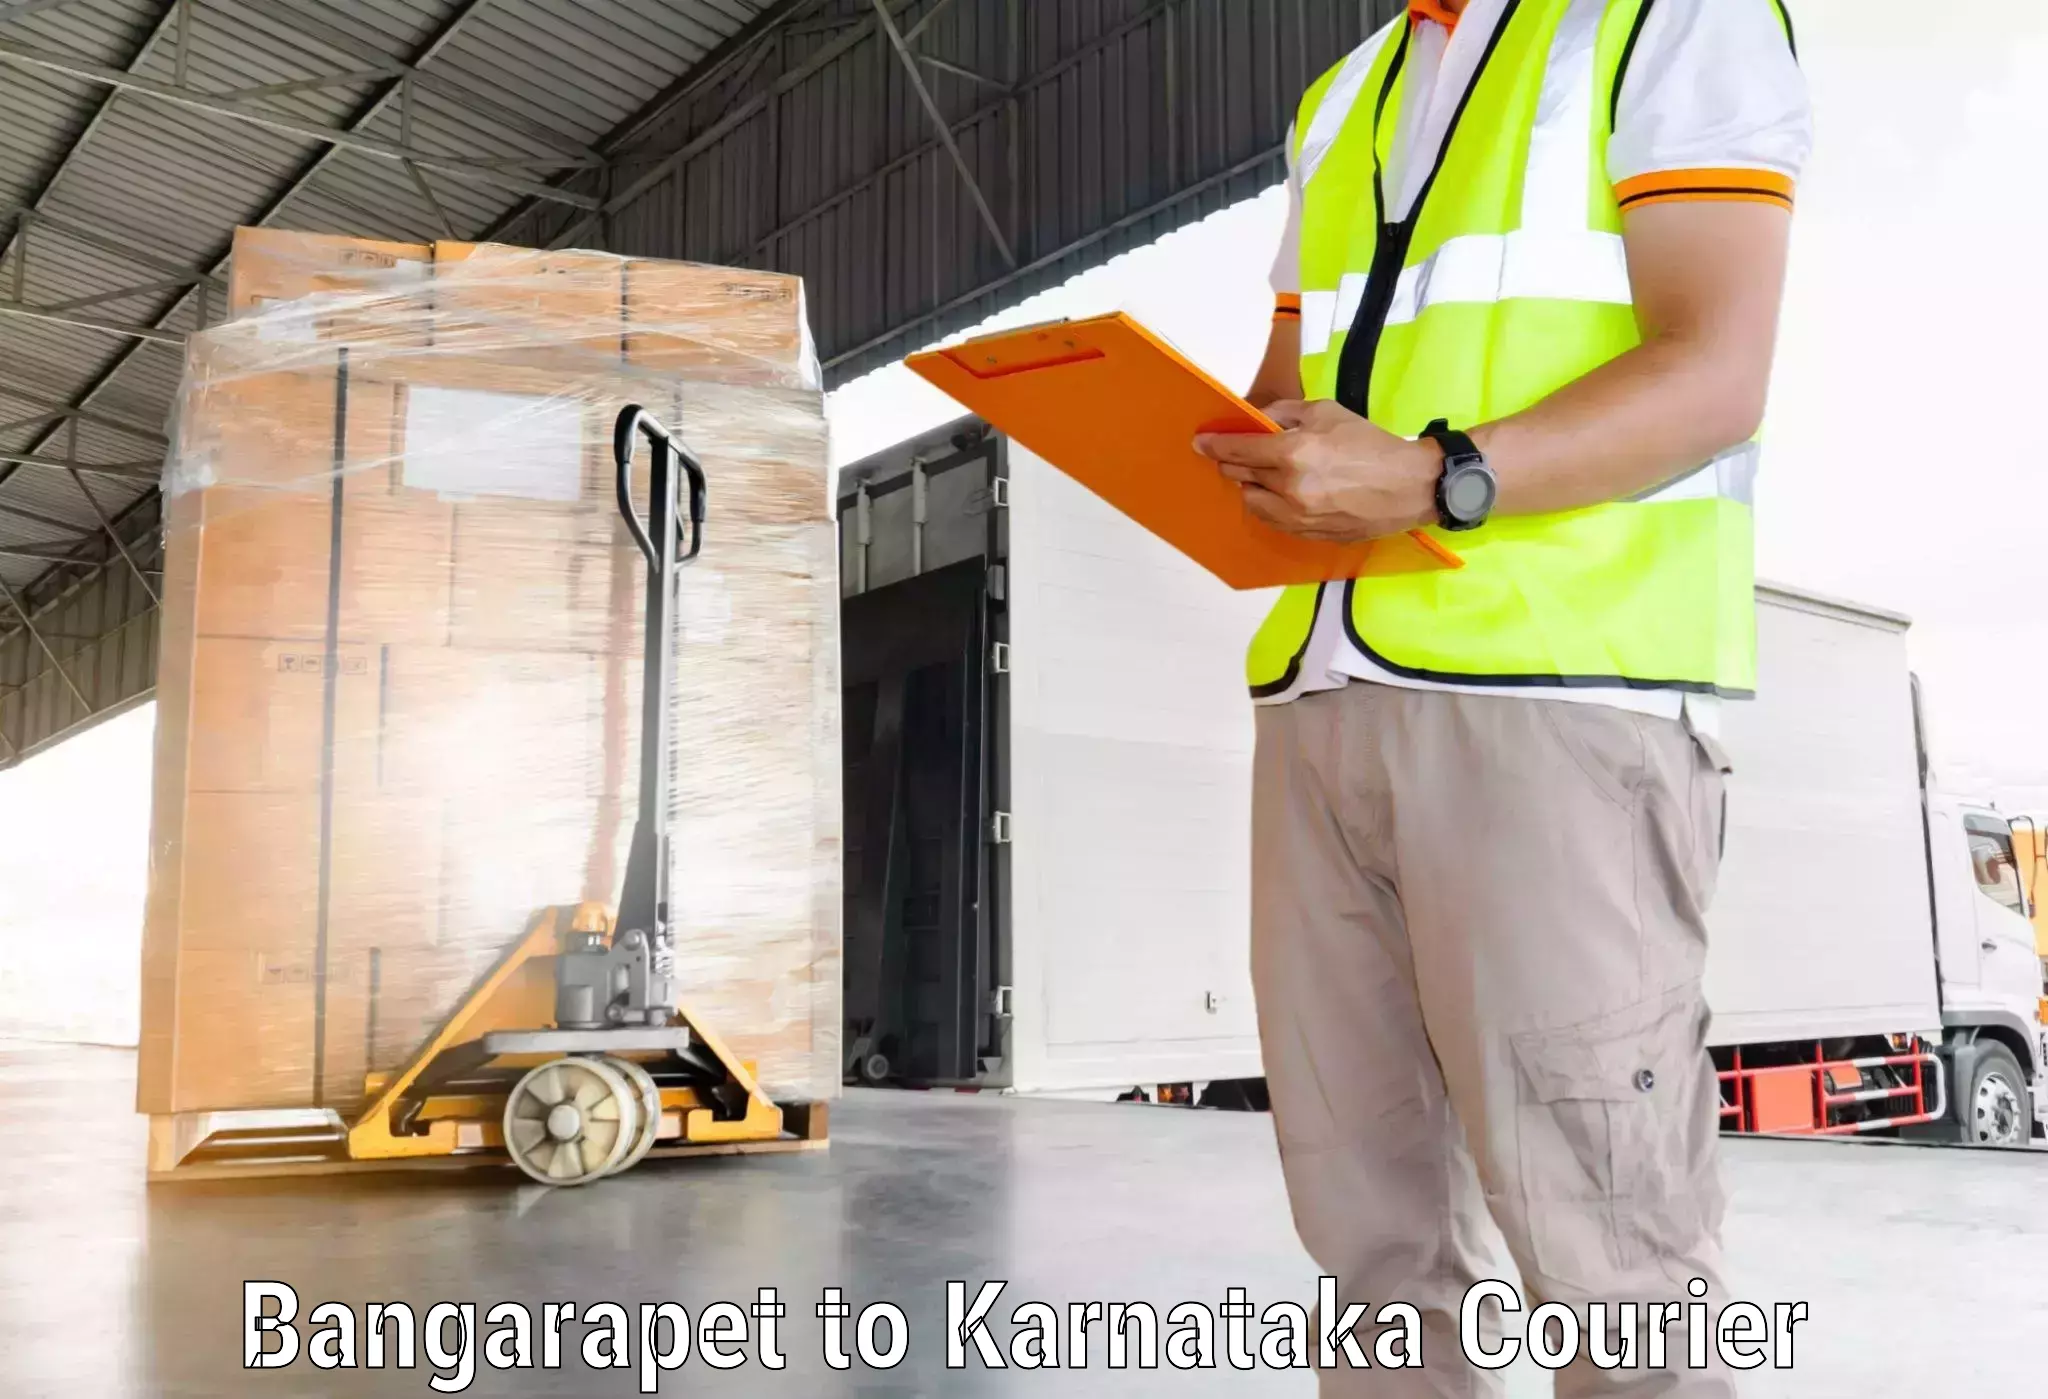 Reliable logistics providers Bangarapet to Shorapur